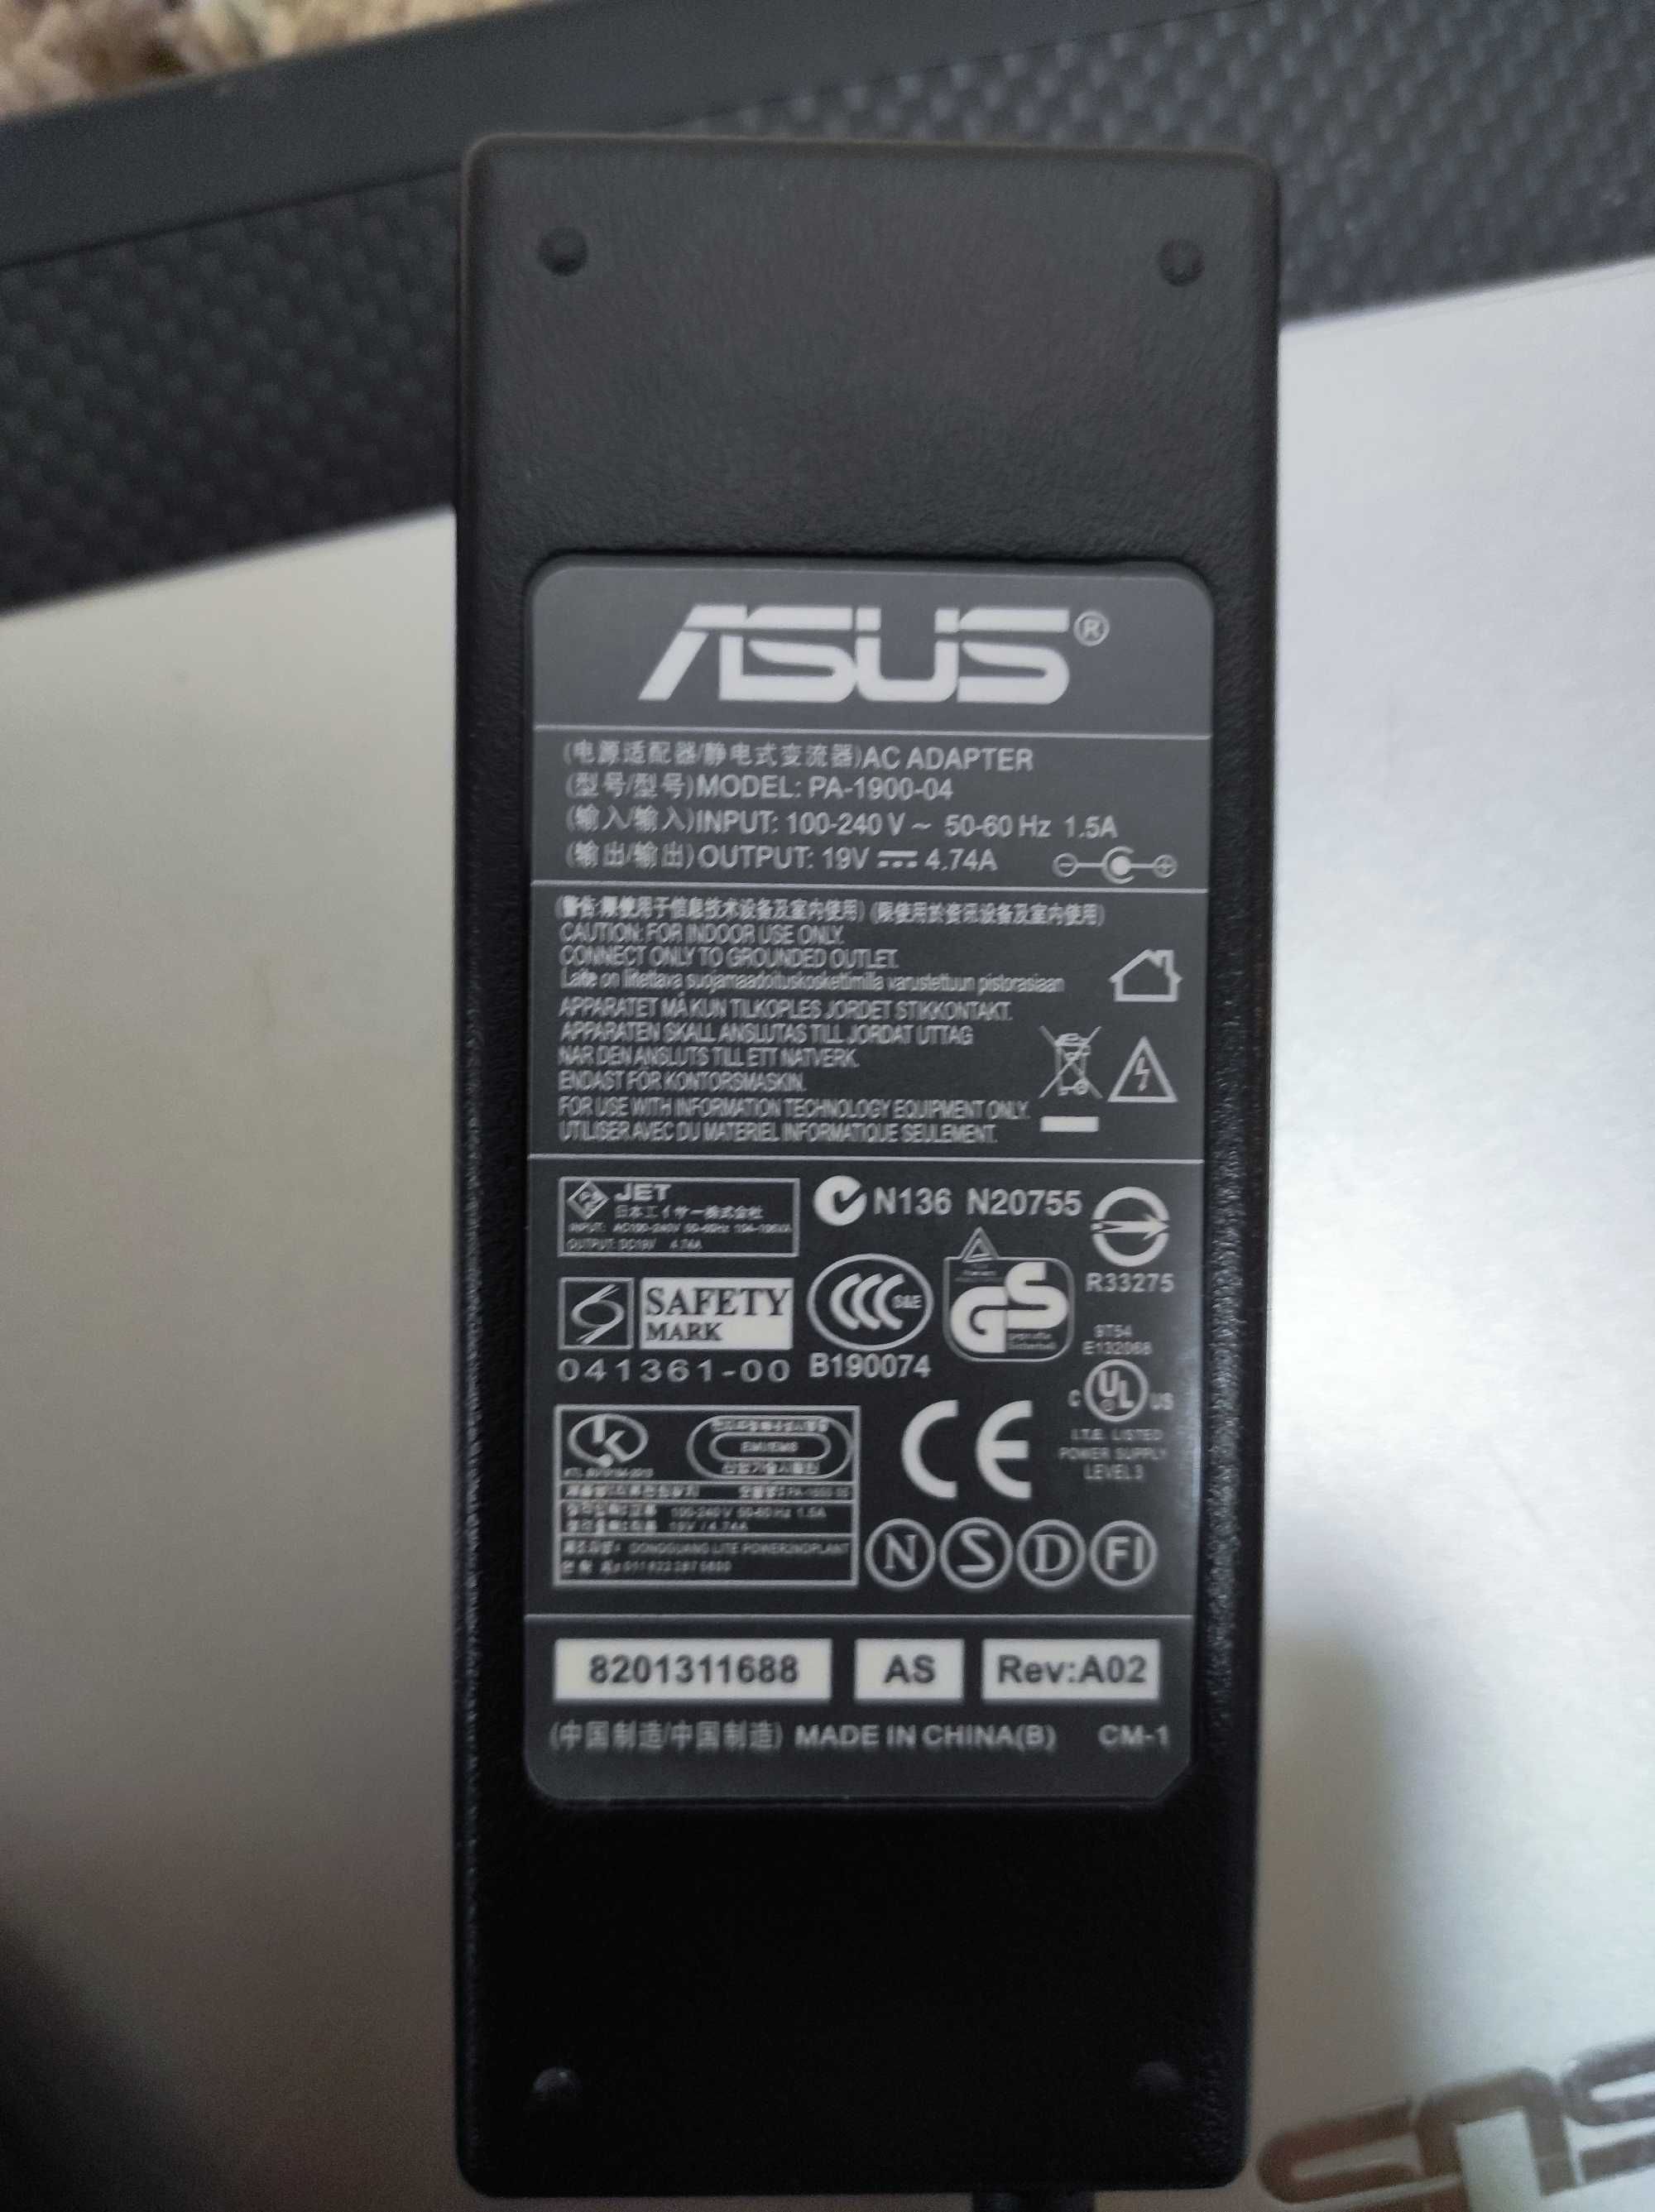 Ноутбук Asus 15G29N001410 модель F3K, блок питания PA-1900-04